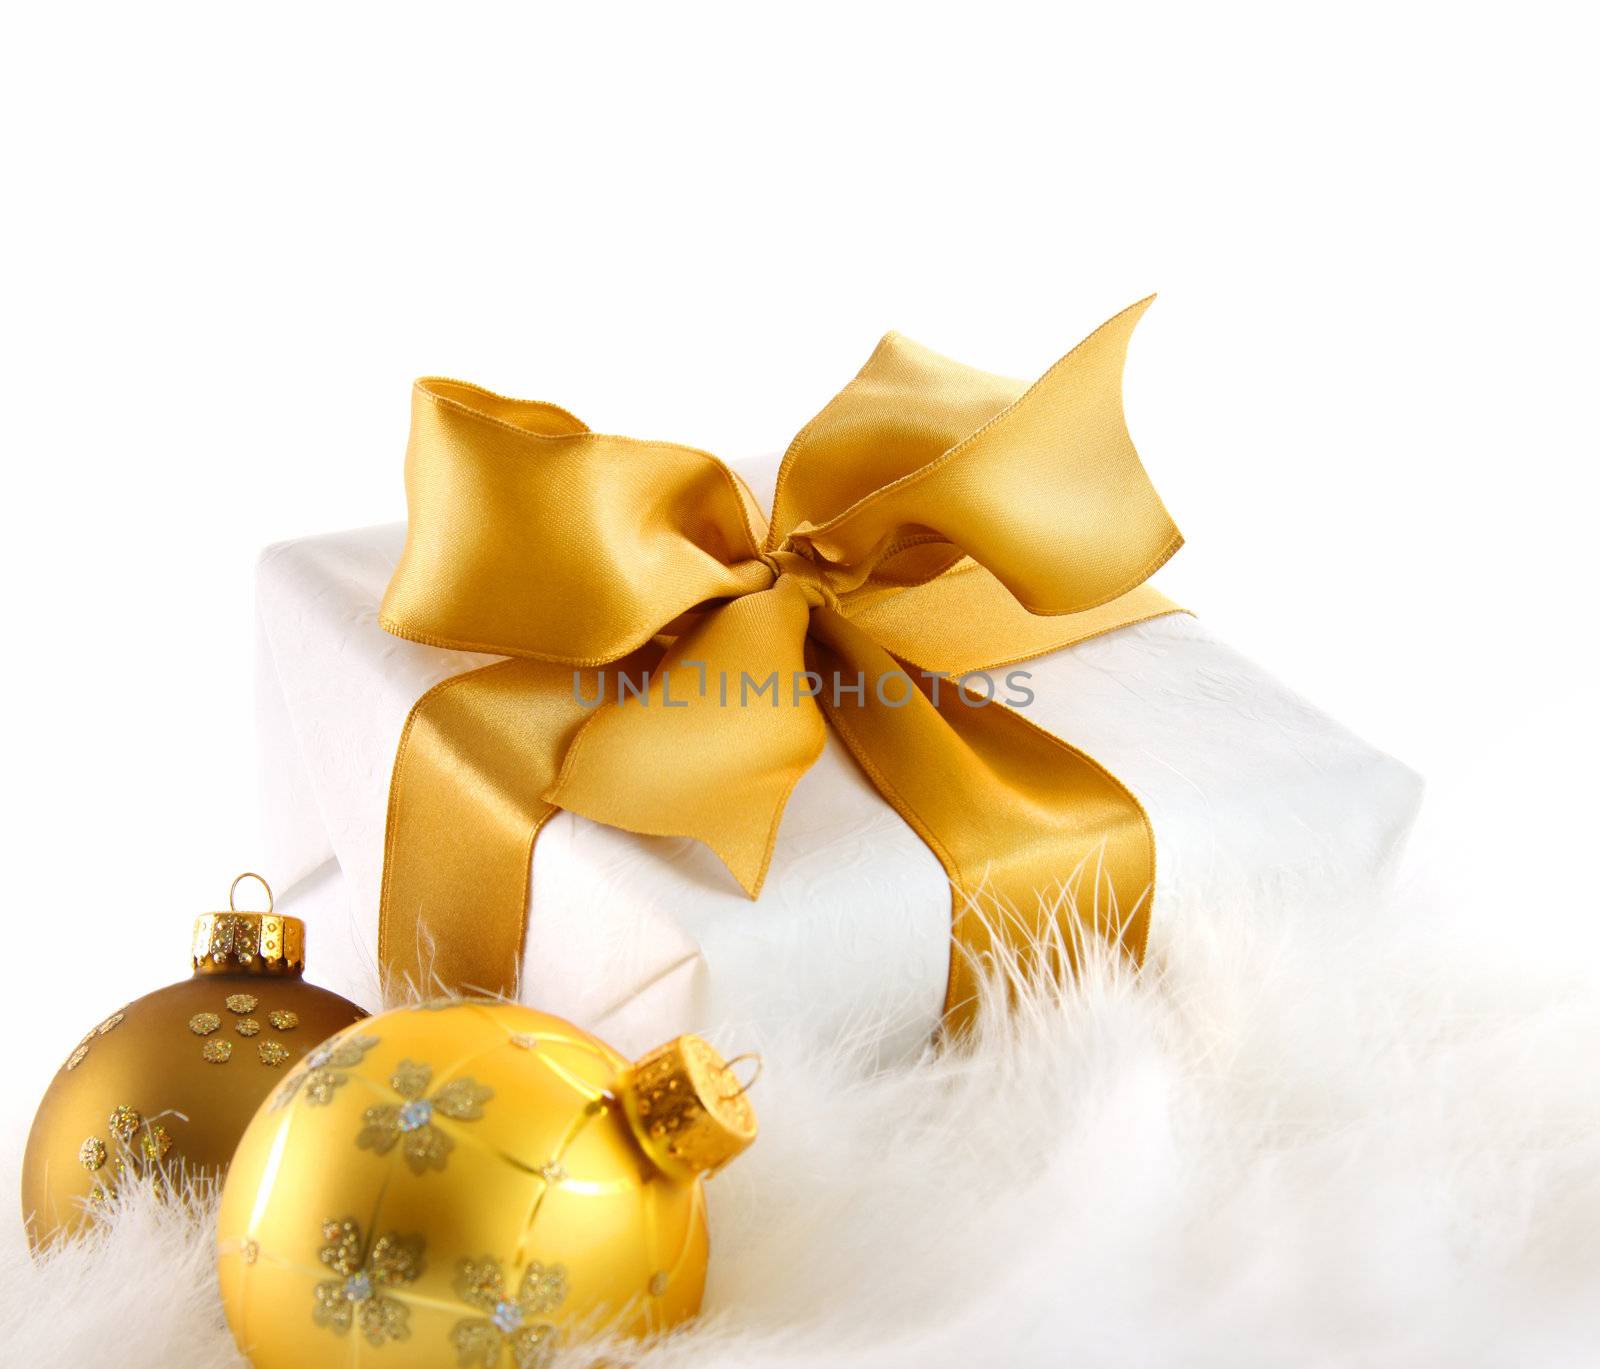 Gold ribbon gift on white background